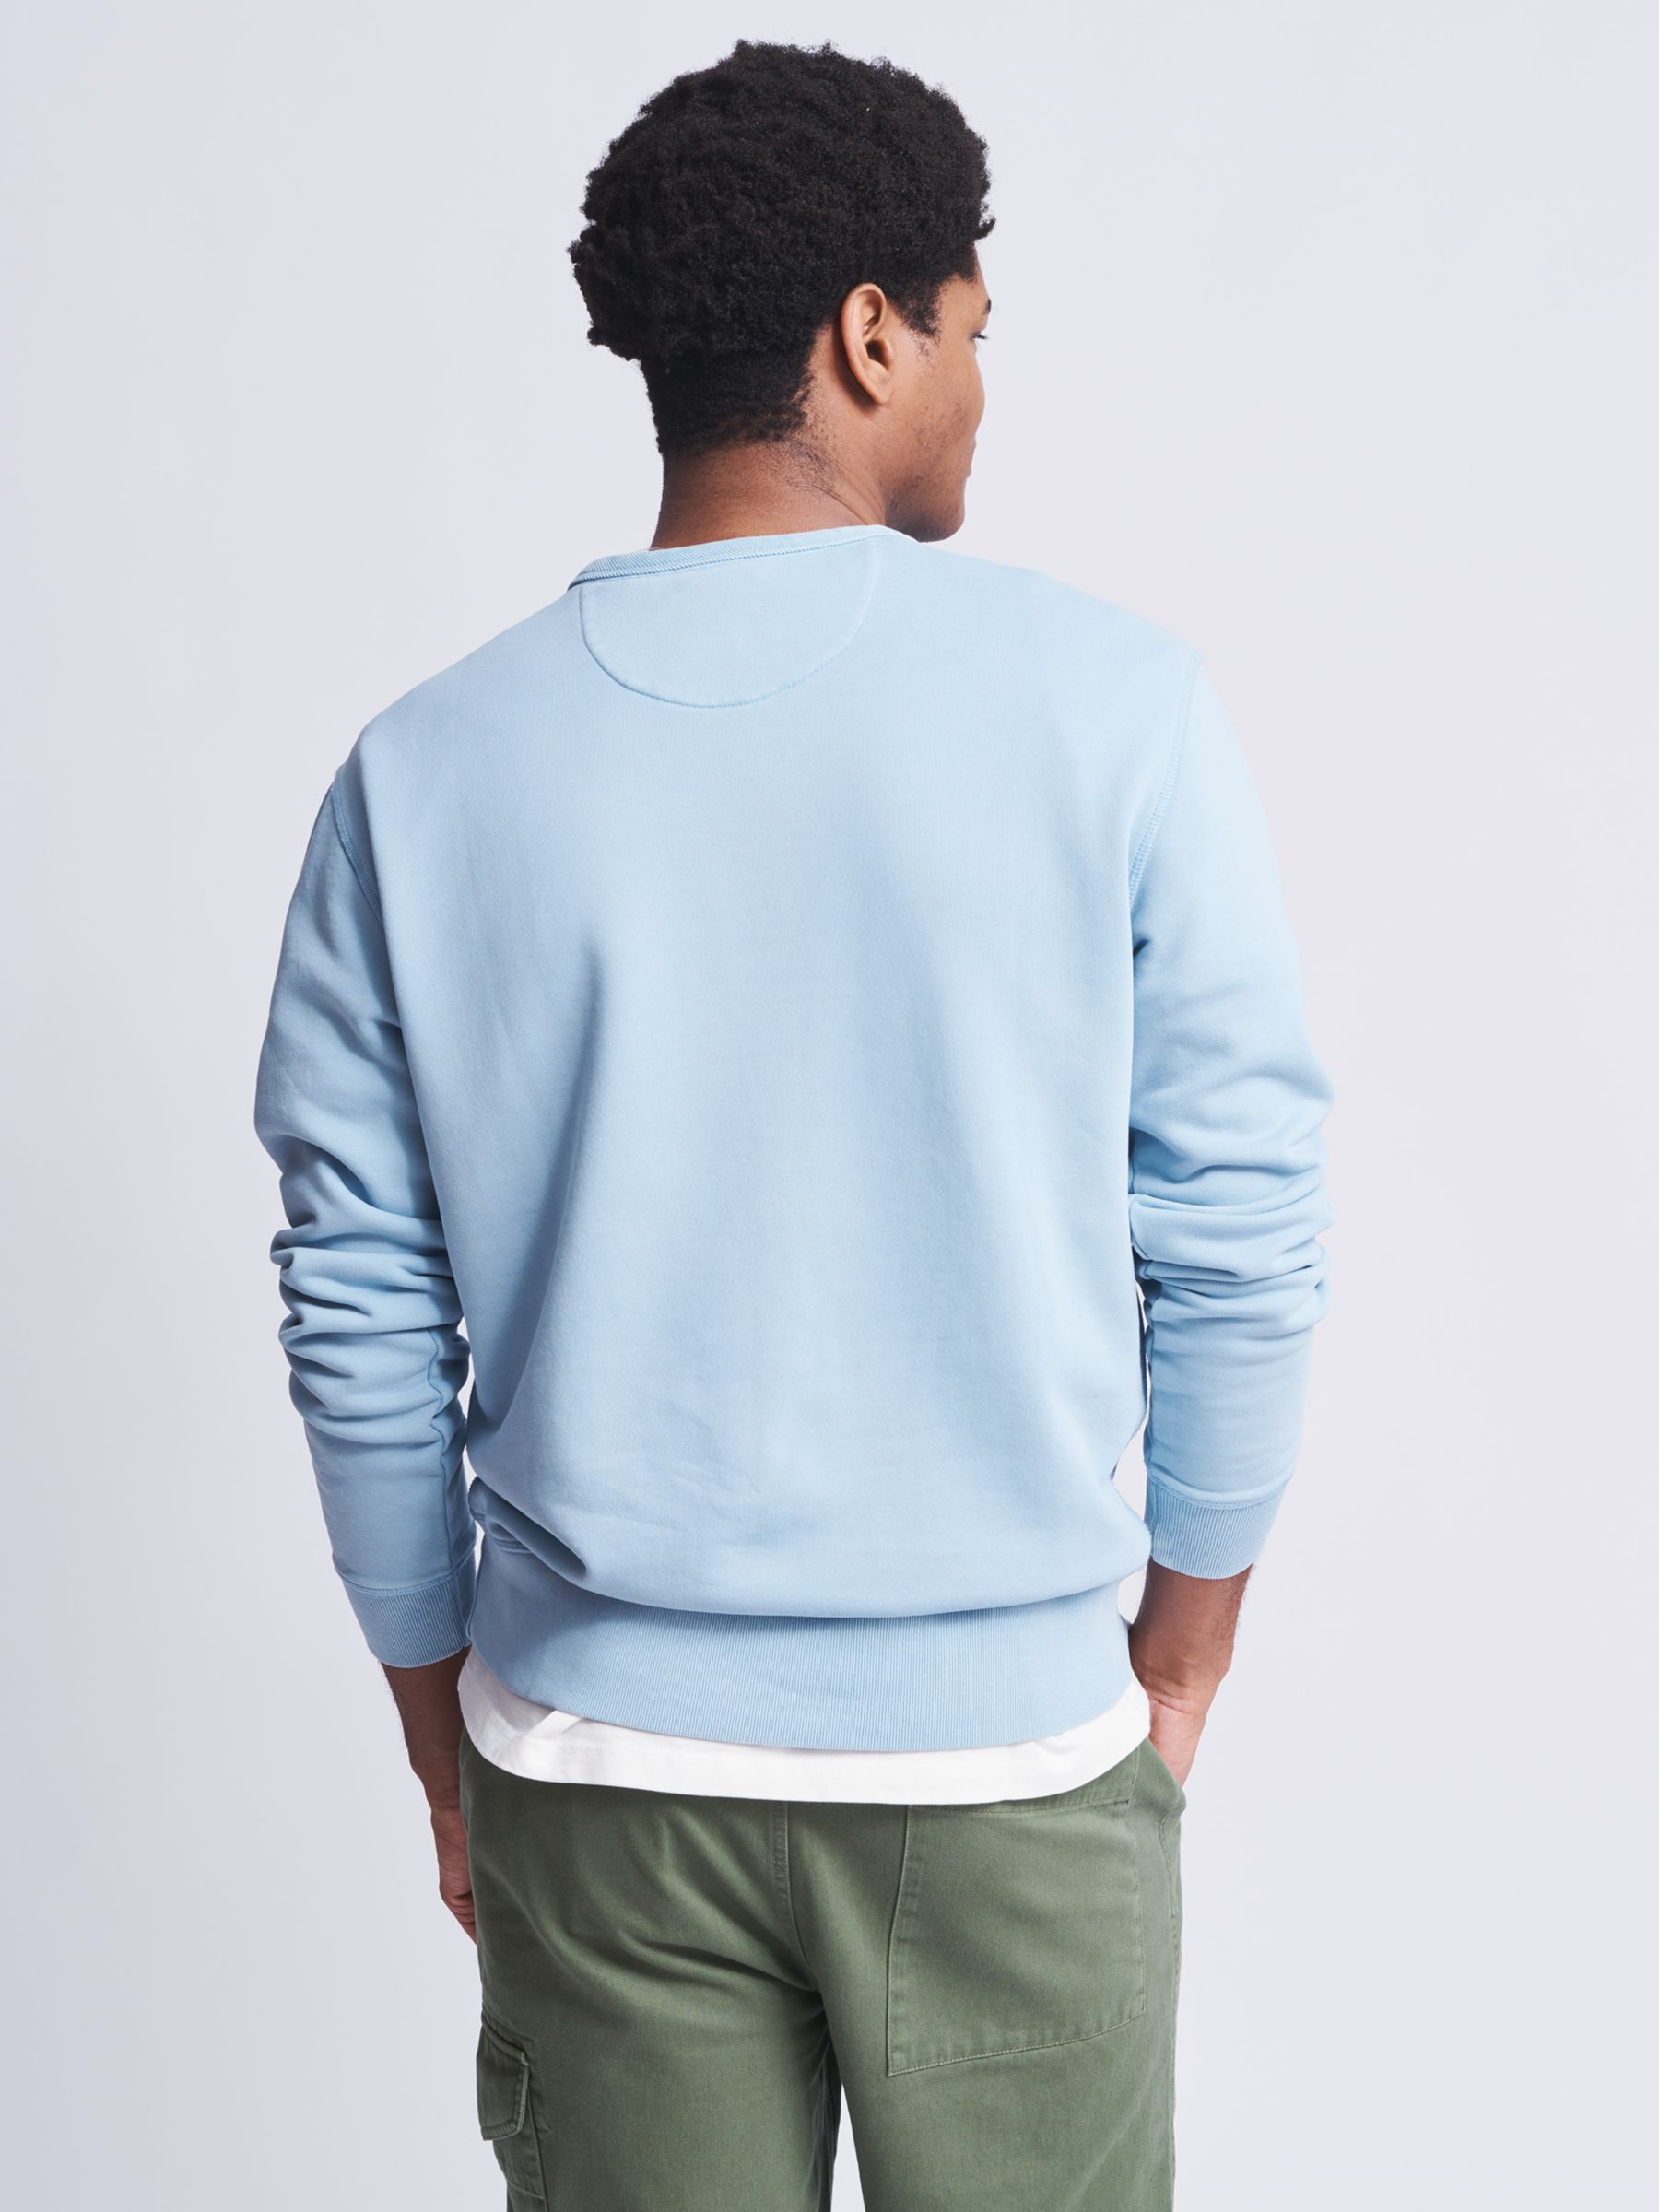 Aubin Vestry Crew Neck Cotton Sweatshirt, China Blue, XS